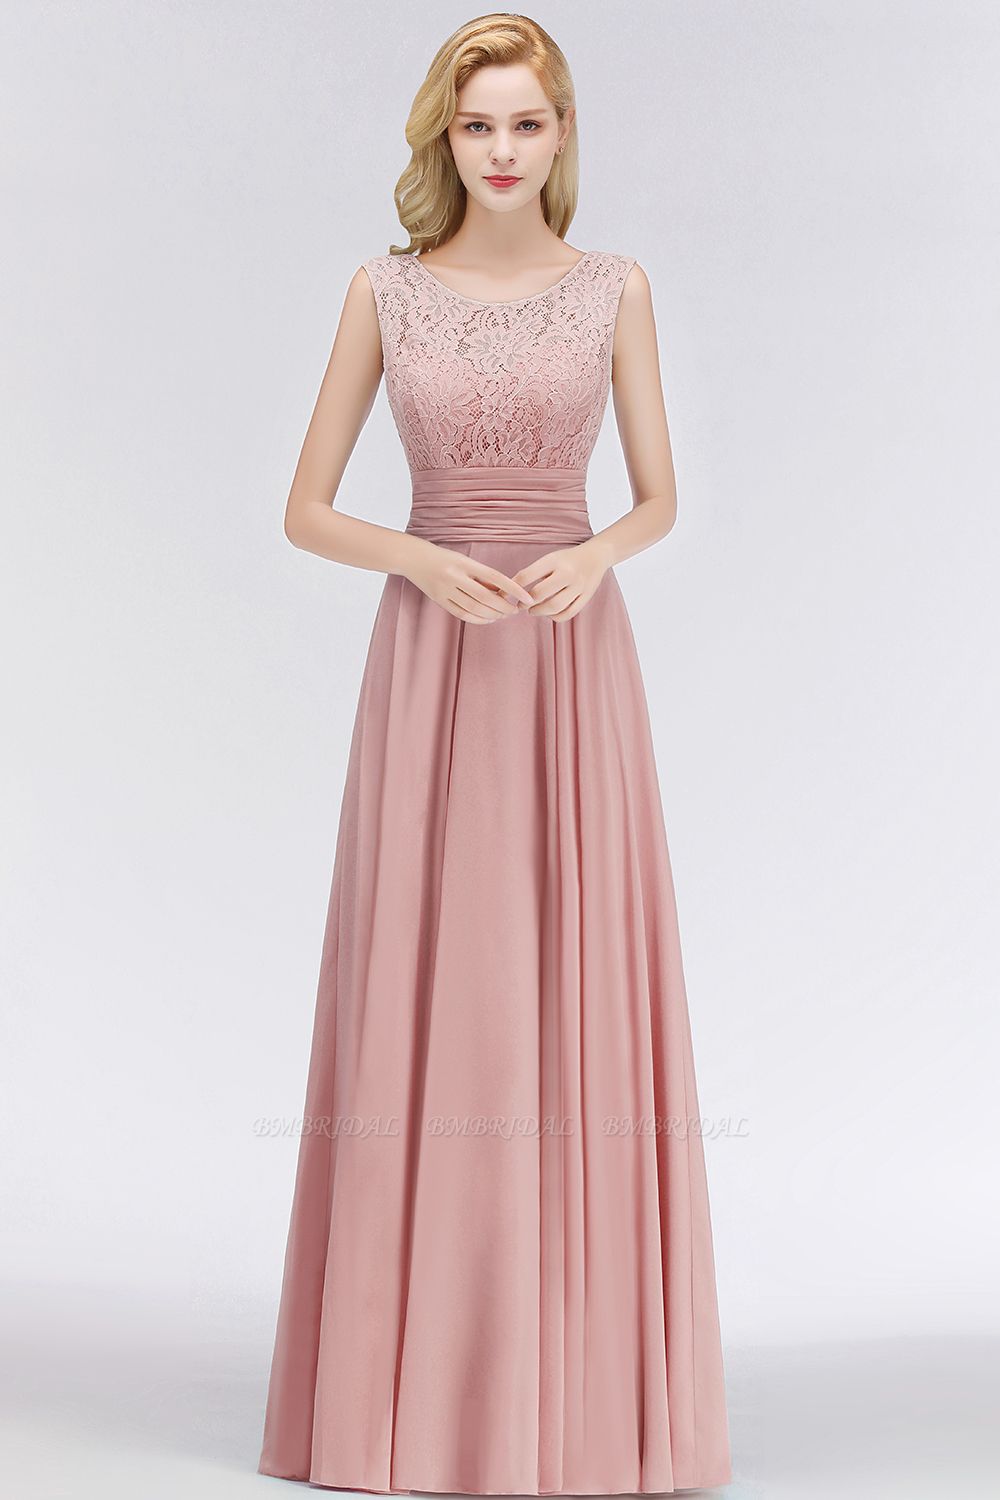 Elegant Lace Sleeveless Chiffon Long Bridesmaid Dress